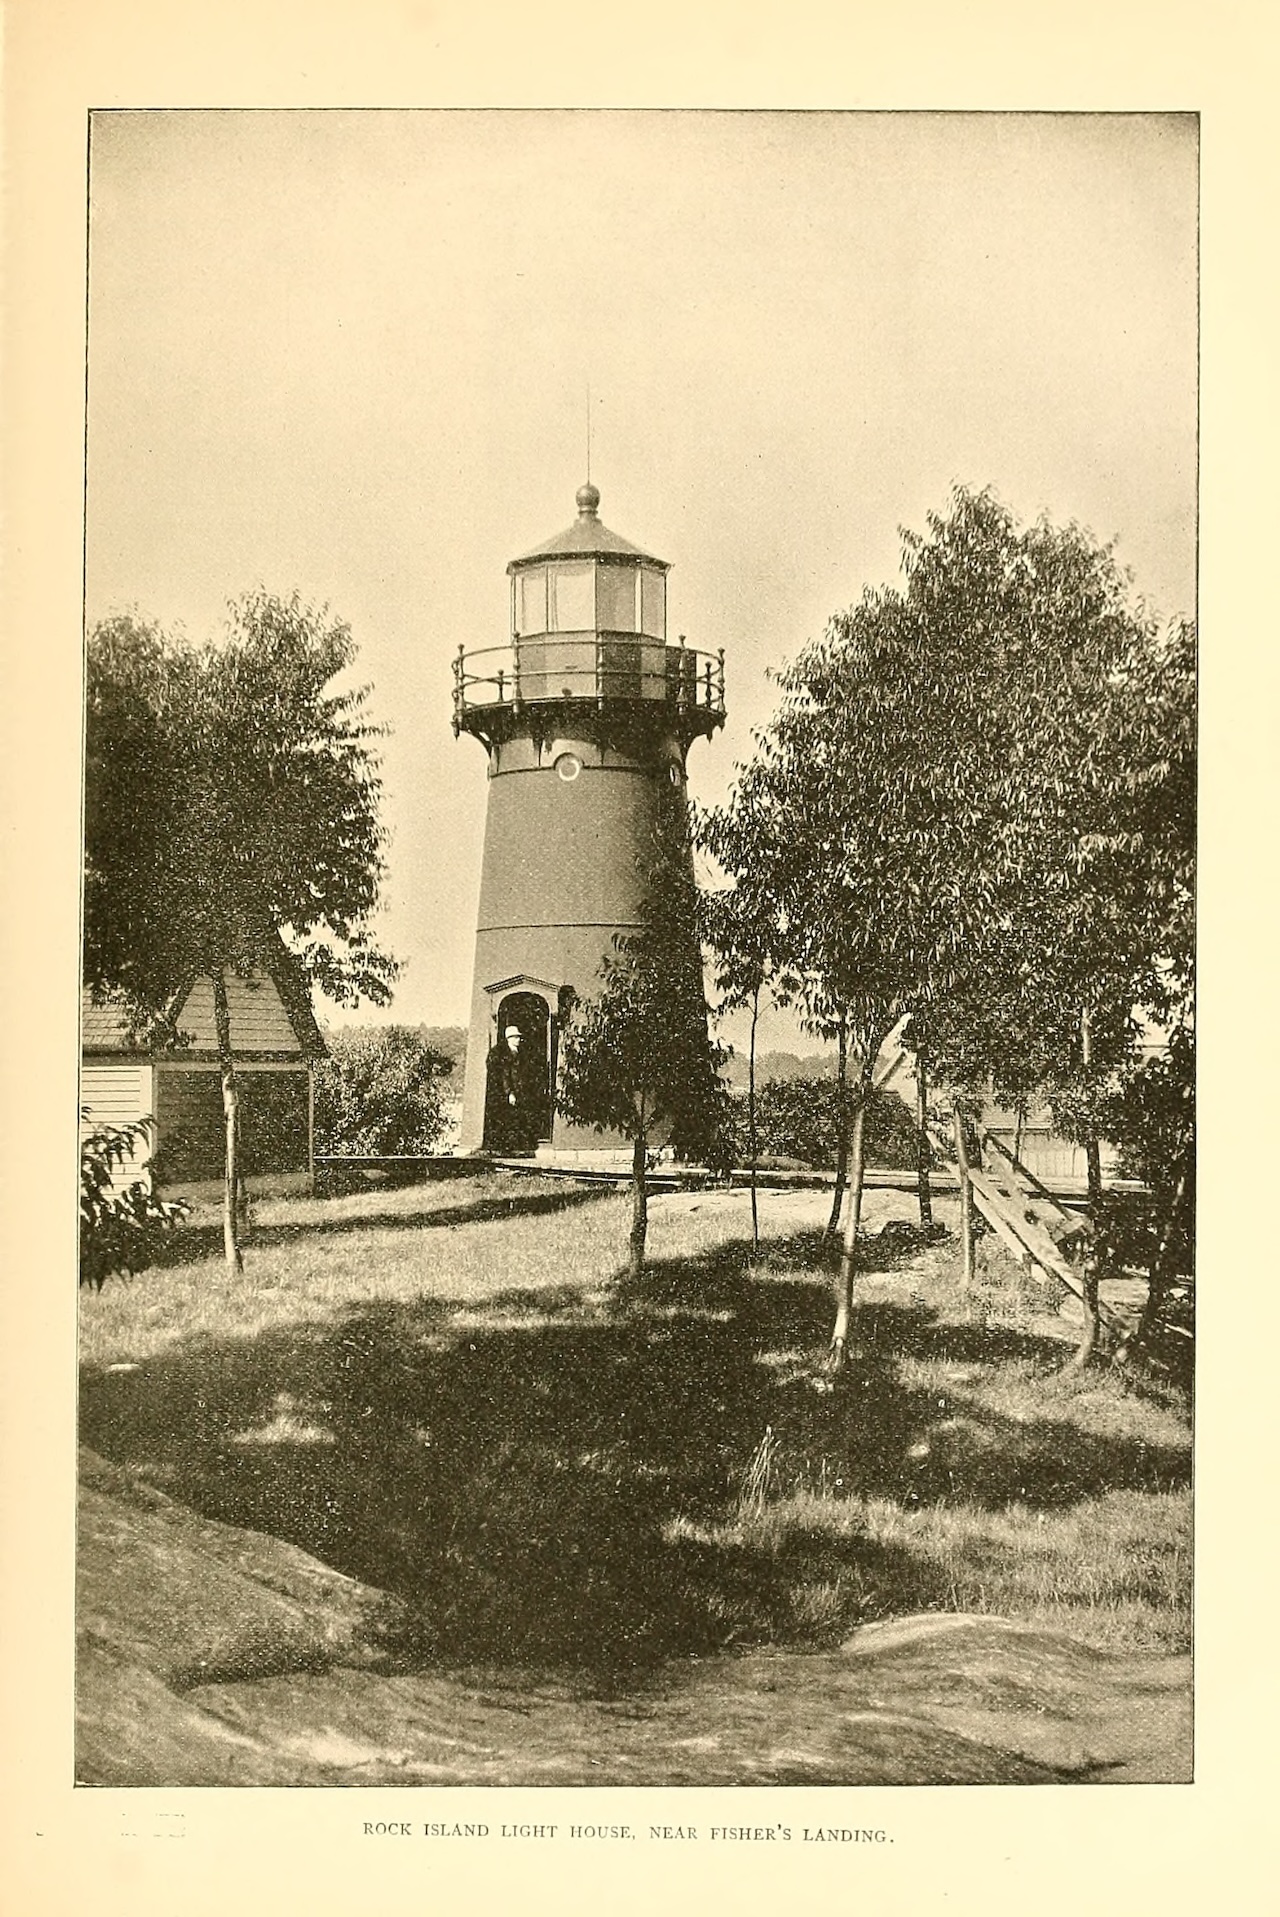 Rock Island previous lighthouse